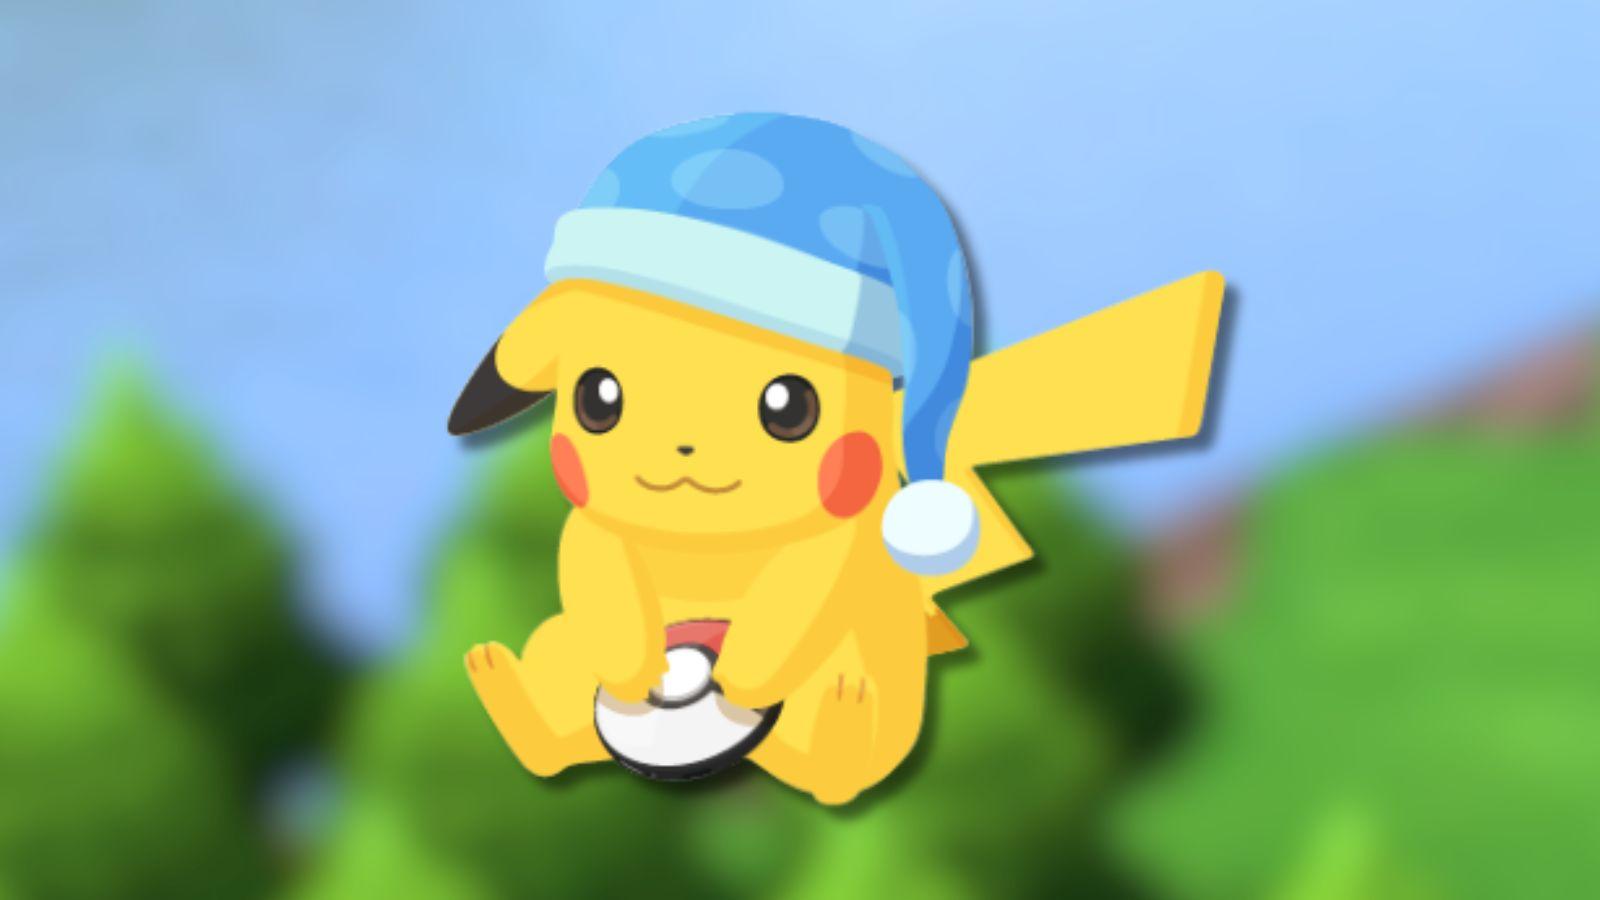 Pokemon Sleep Pikachu mascot with game background.